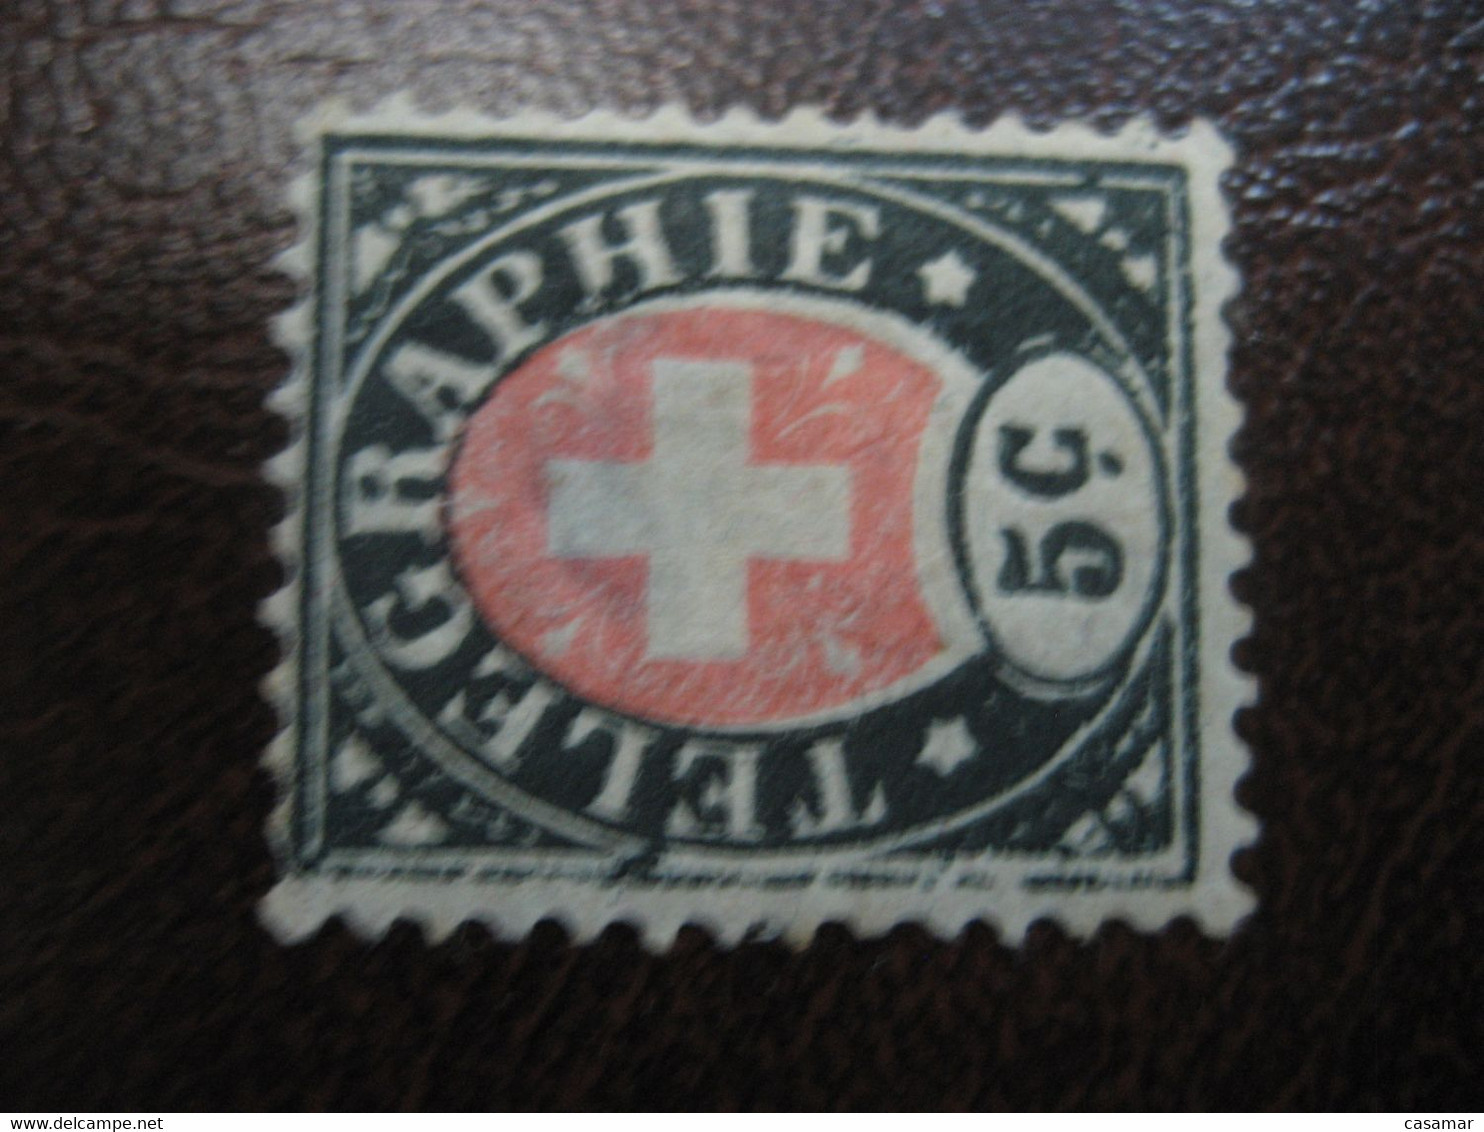 5c TELEGRAPHIE Telegraph SWITZERLAND Fiscal Revenue Suisse - Télégraphe